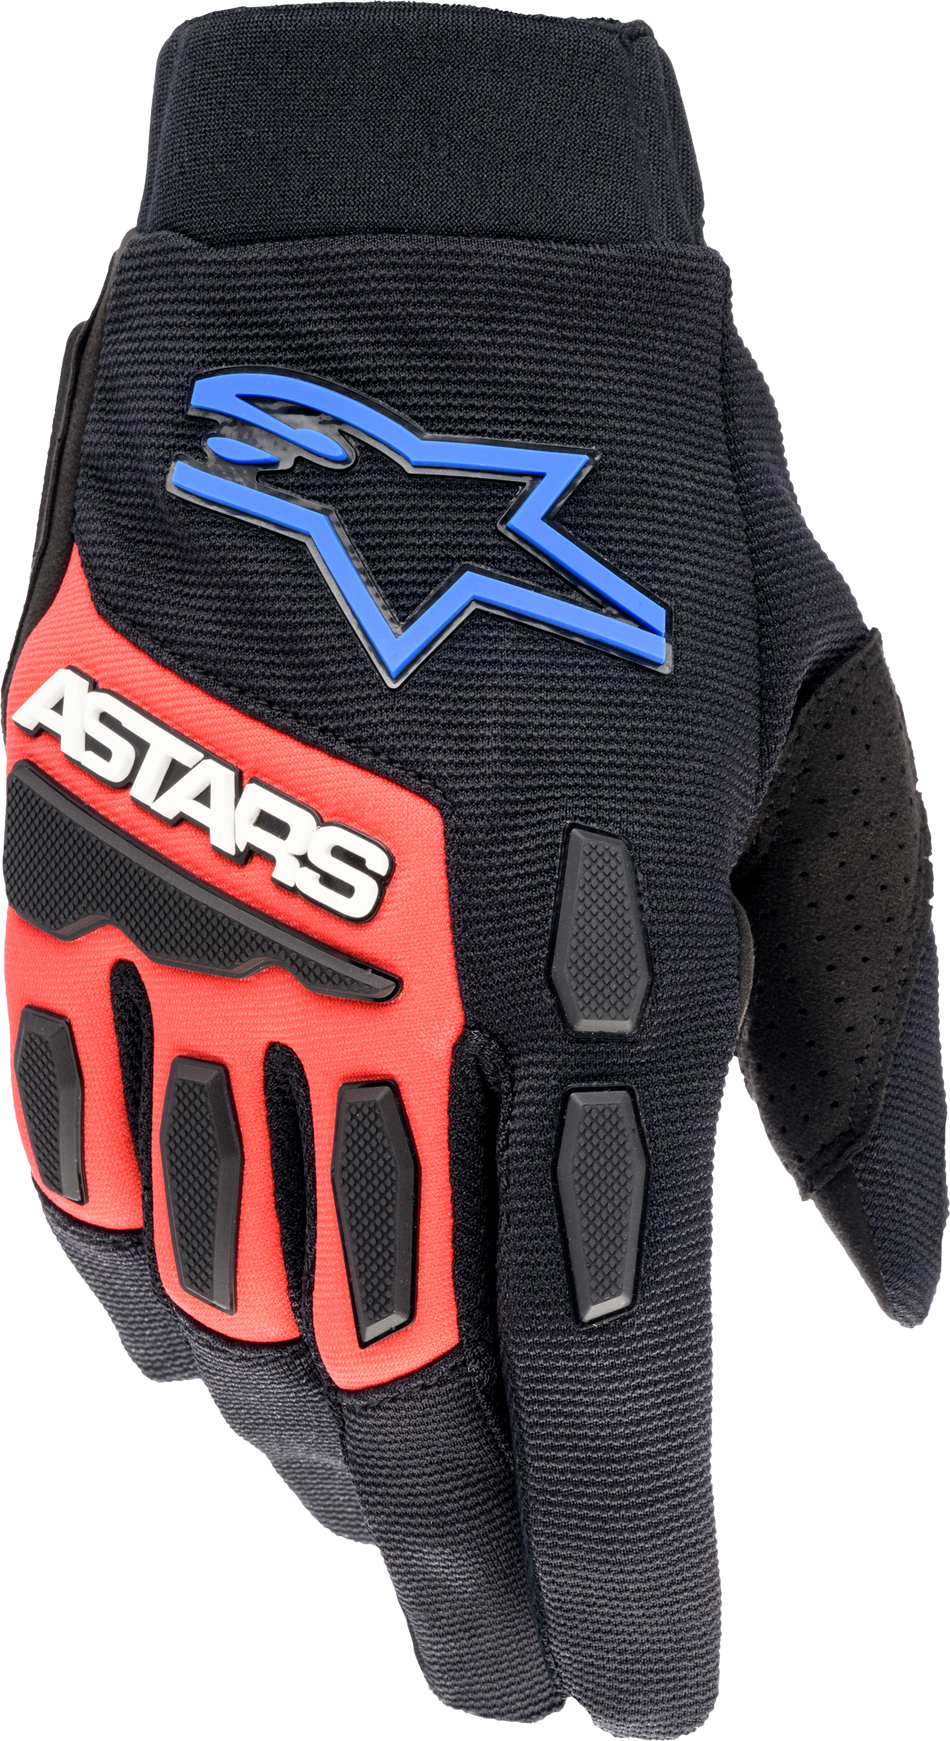 ALPINESTARS Full Bore Xt Gloves Black/Bright Blue/Red Lg 3563623-1317-LG